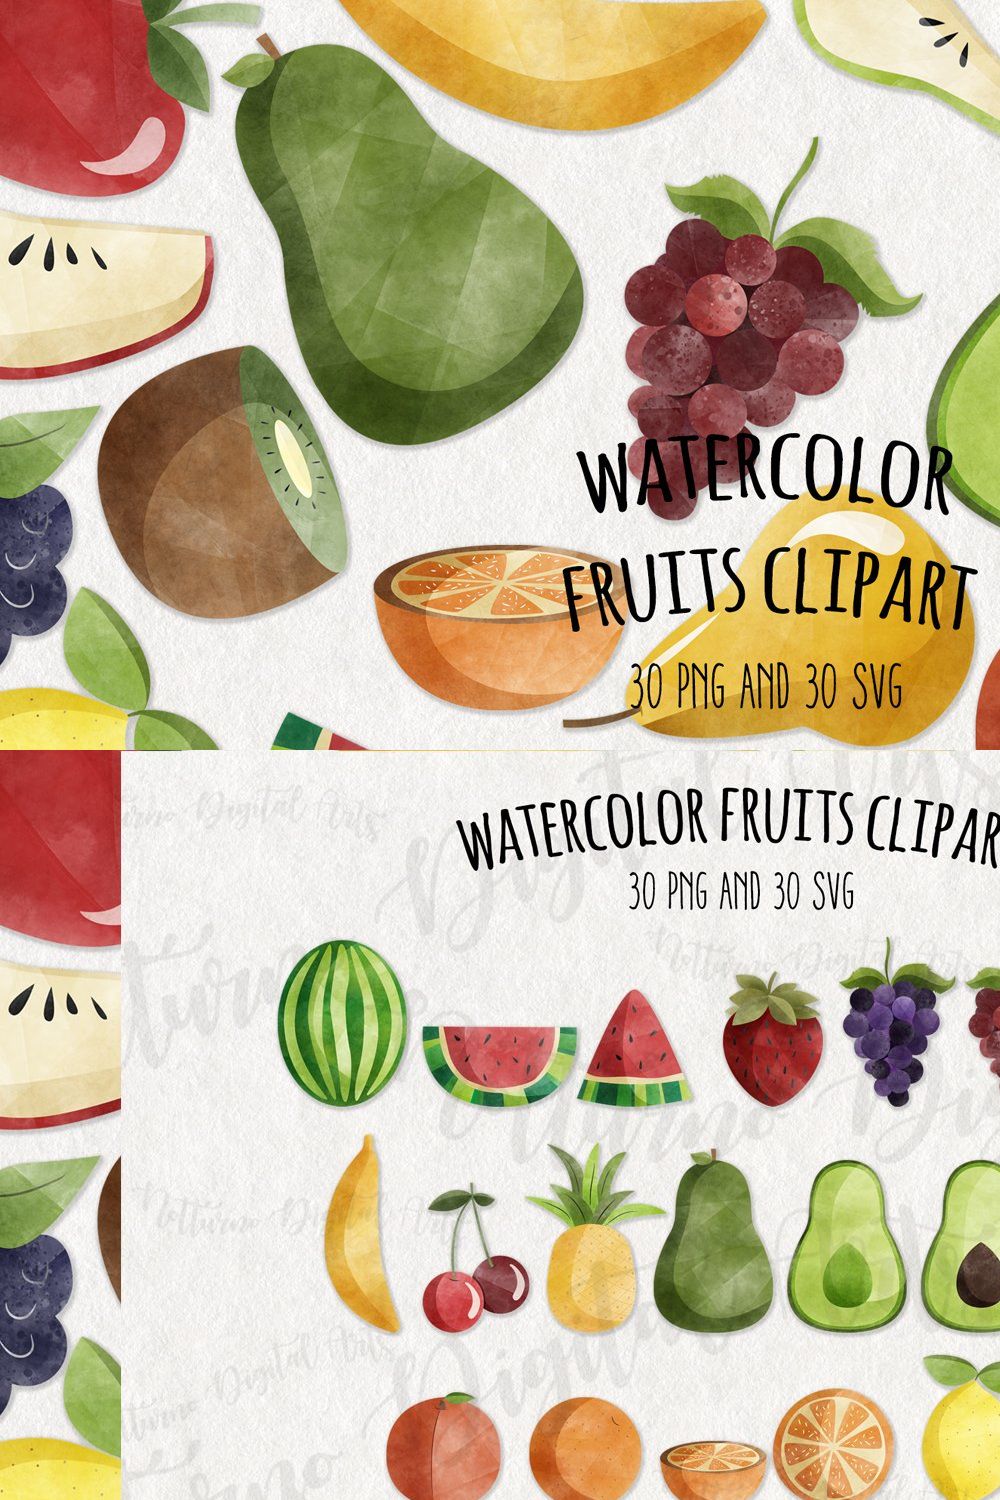 Watercolor Fruits Clipart pinterest preview image.